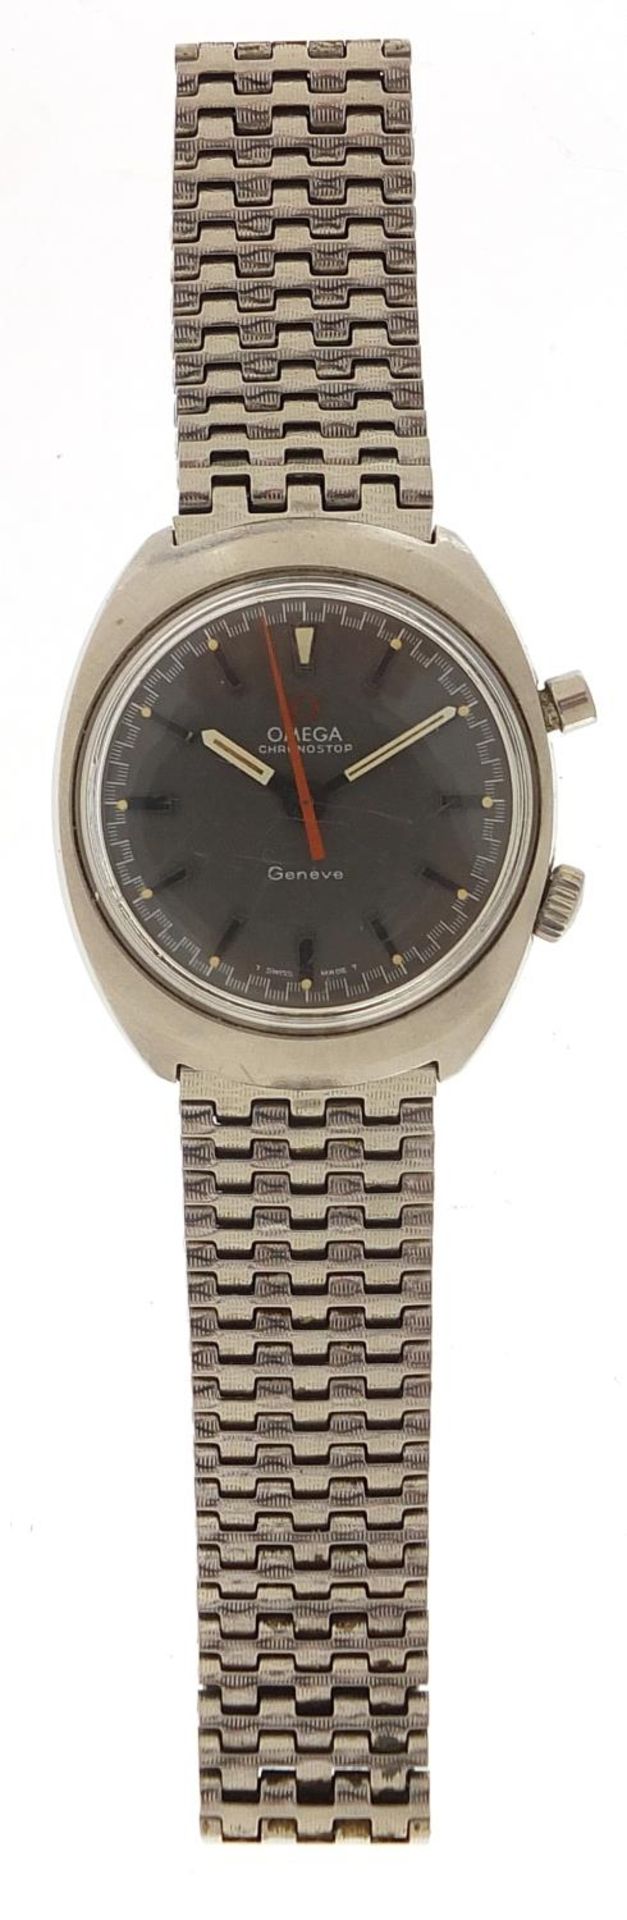 Omega, vintage gentlemen's Omega chronometer wristwatch, the case 34.5mm wide - Image 2 of 5